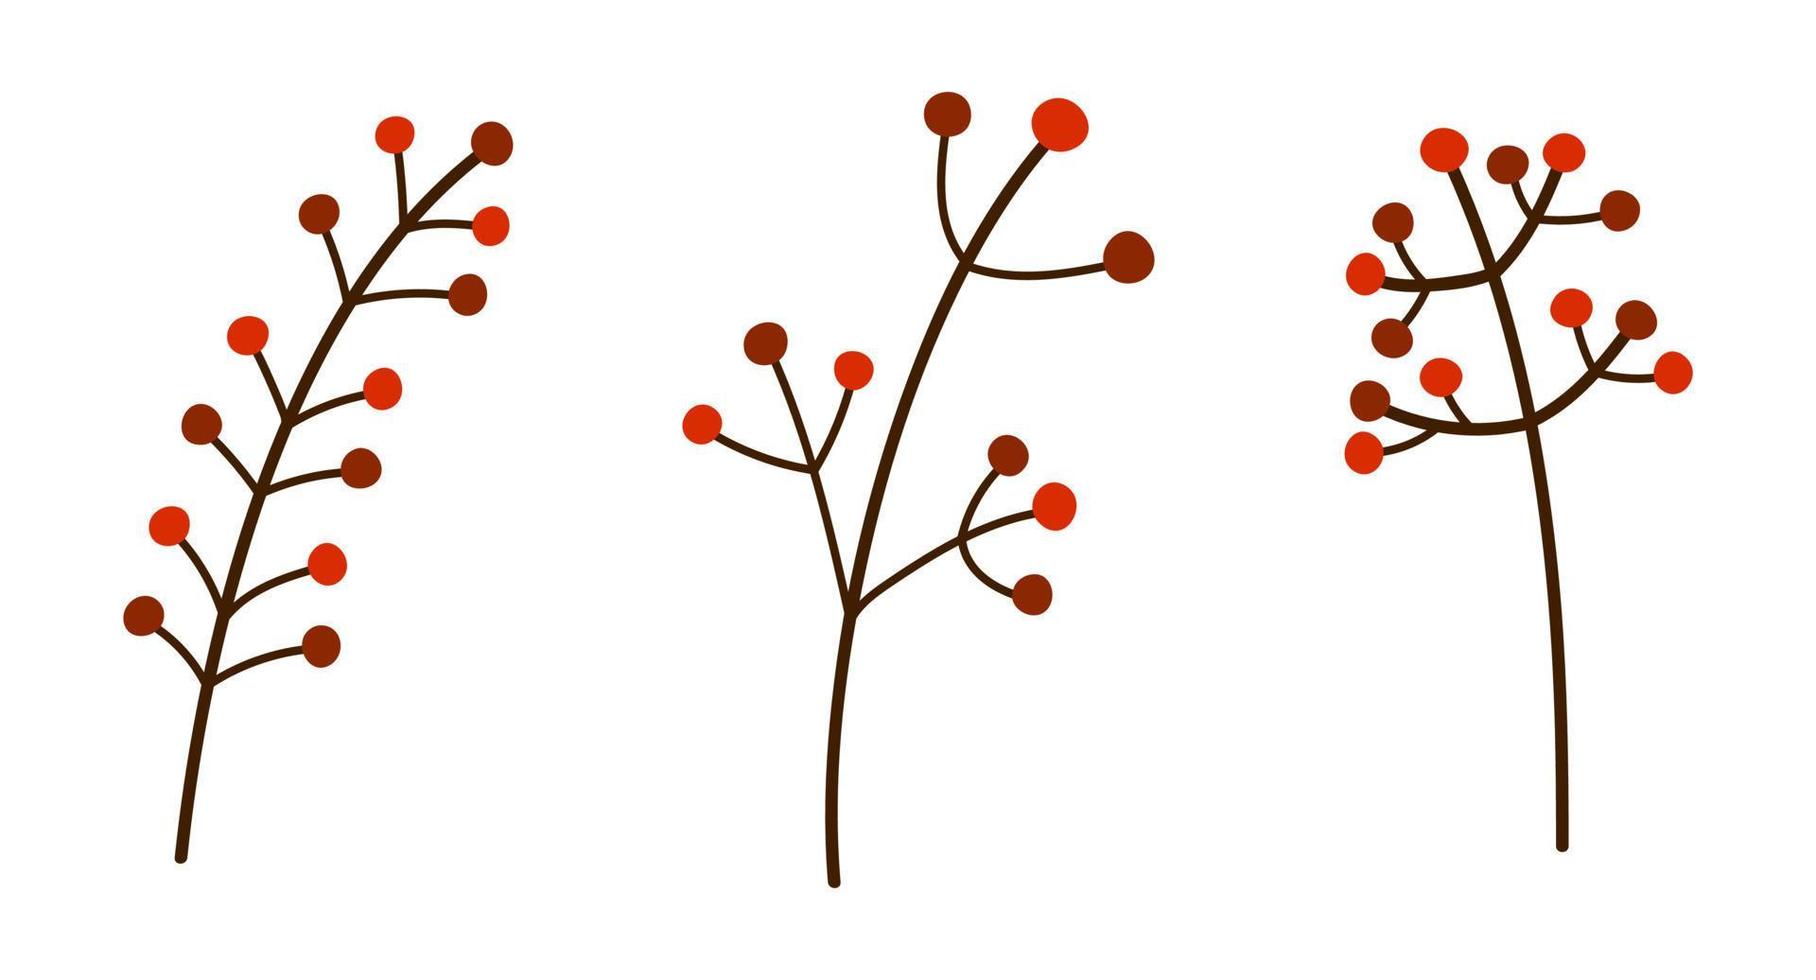 conjunto de ramas aisladas de otoño con bayas. bayas rojas decorativas. ilustración botánica vectorial de bayas de temporada. vector